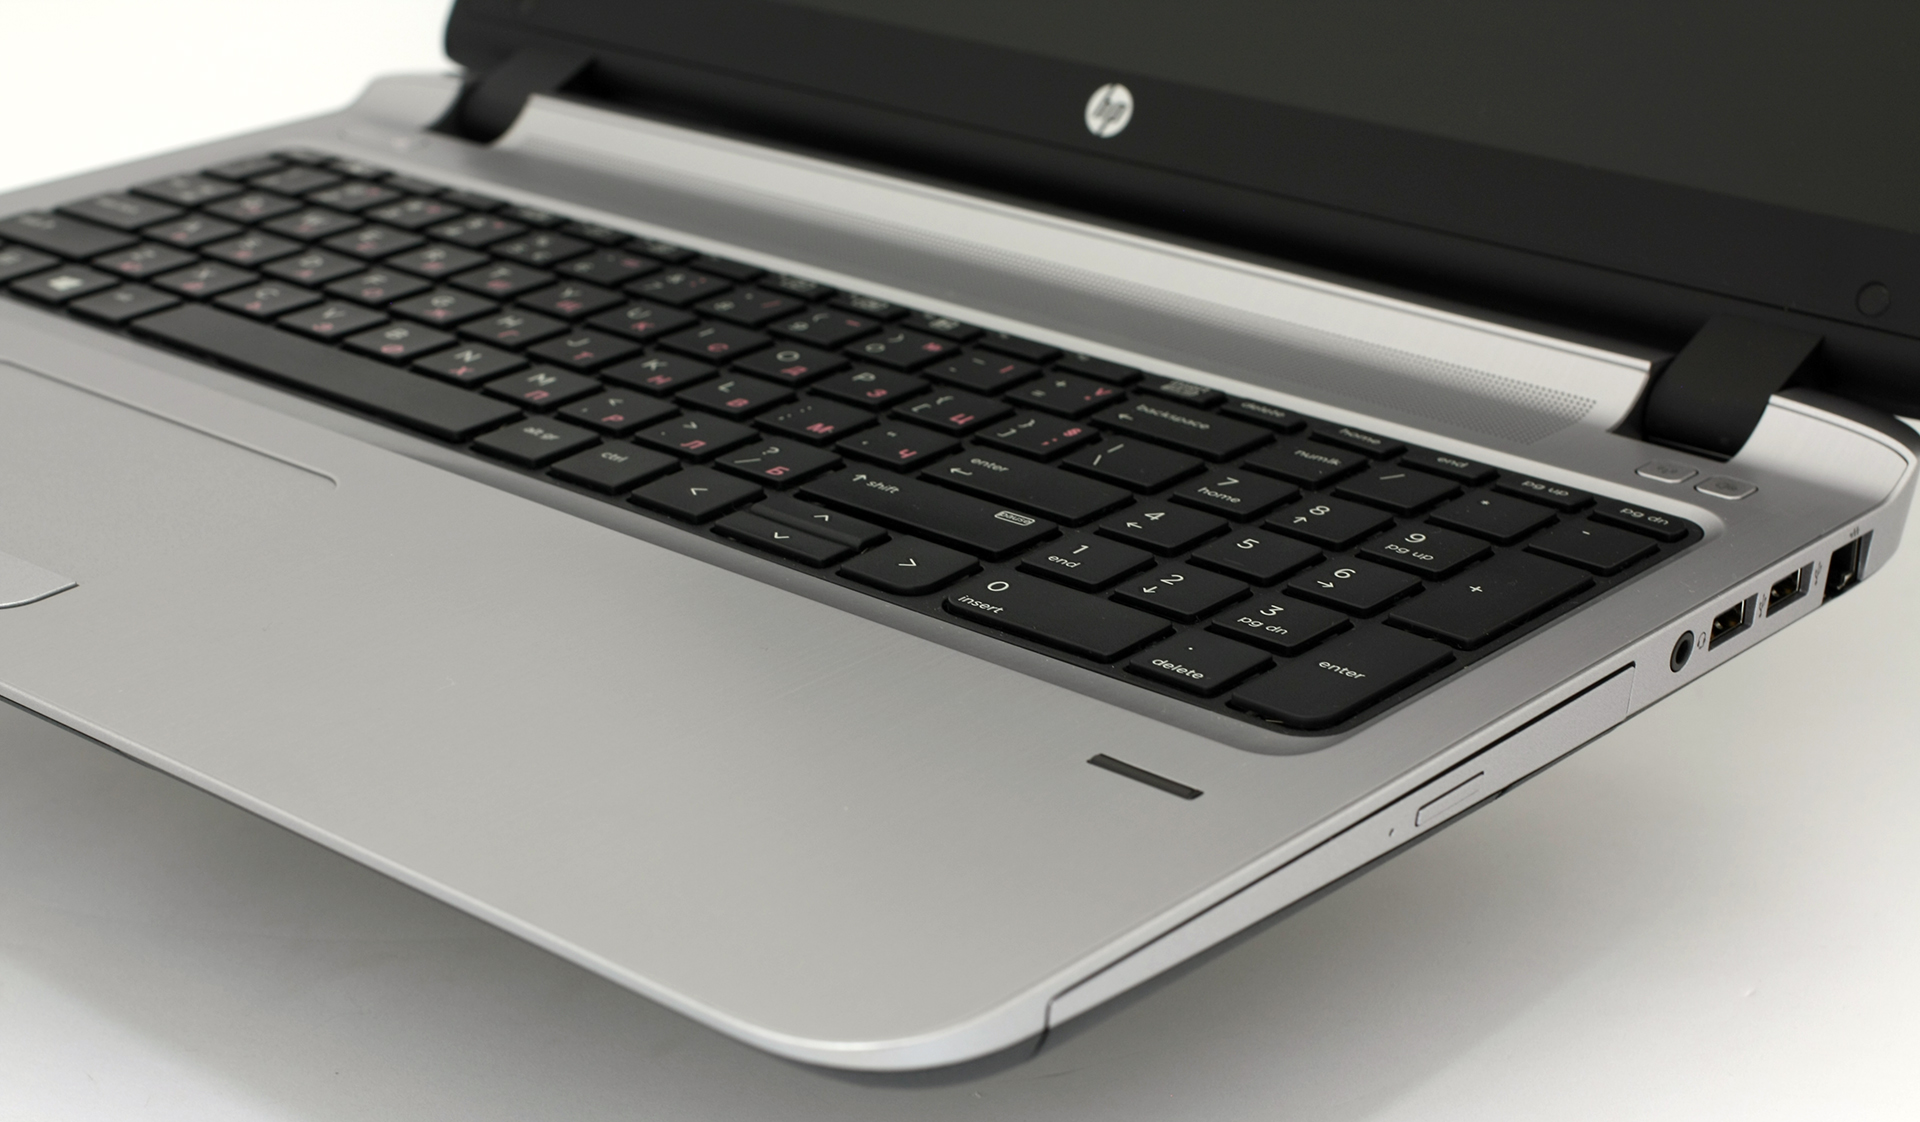 HP ProBook 455 G3 - Specs, Tests, and Prices | LaptopMedia.com